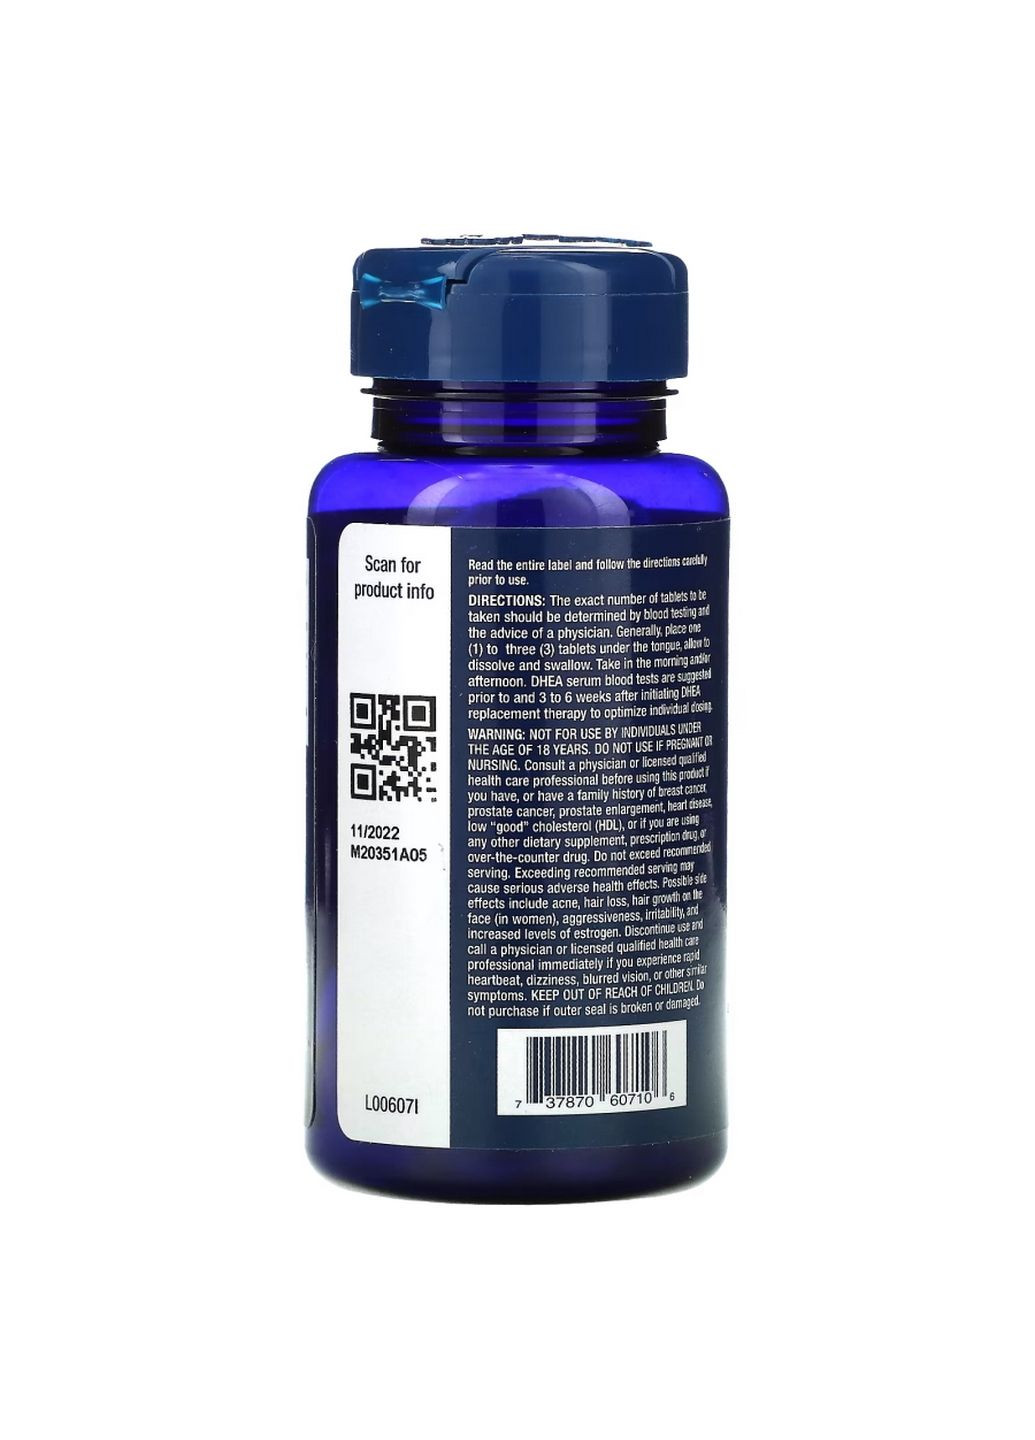 Стимулятор тестостерона DHEA 25 mg Dissolve, 100 таблеток Life Extension (293339976)